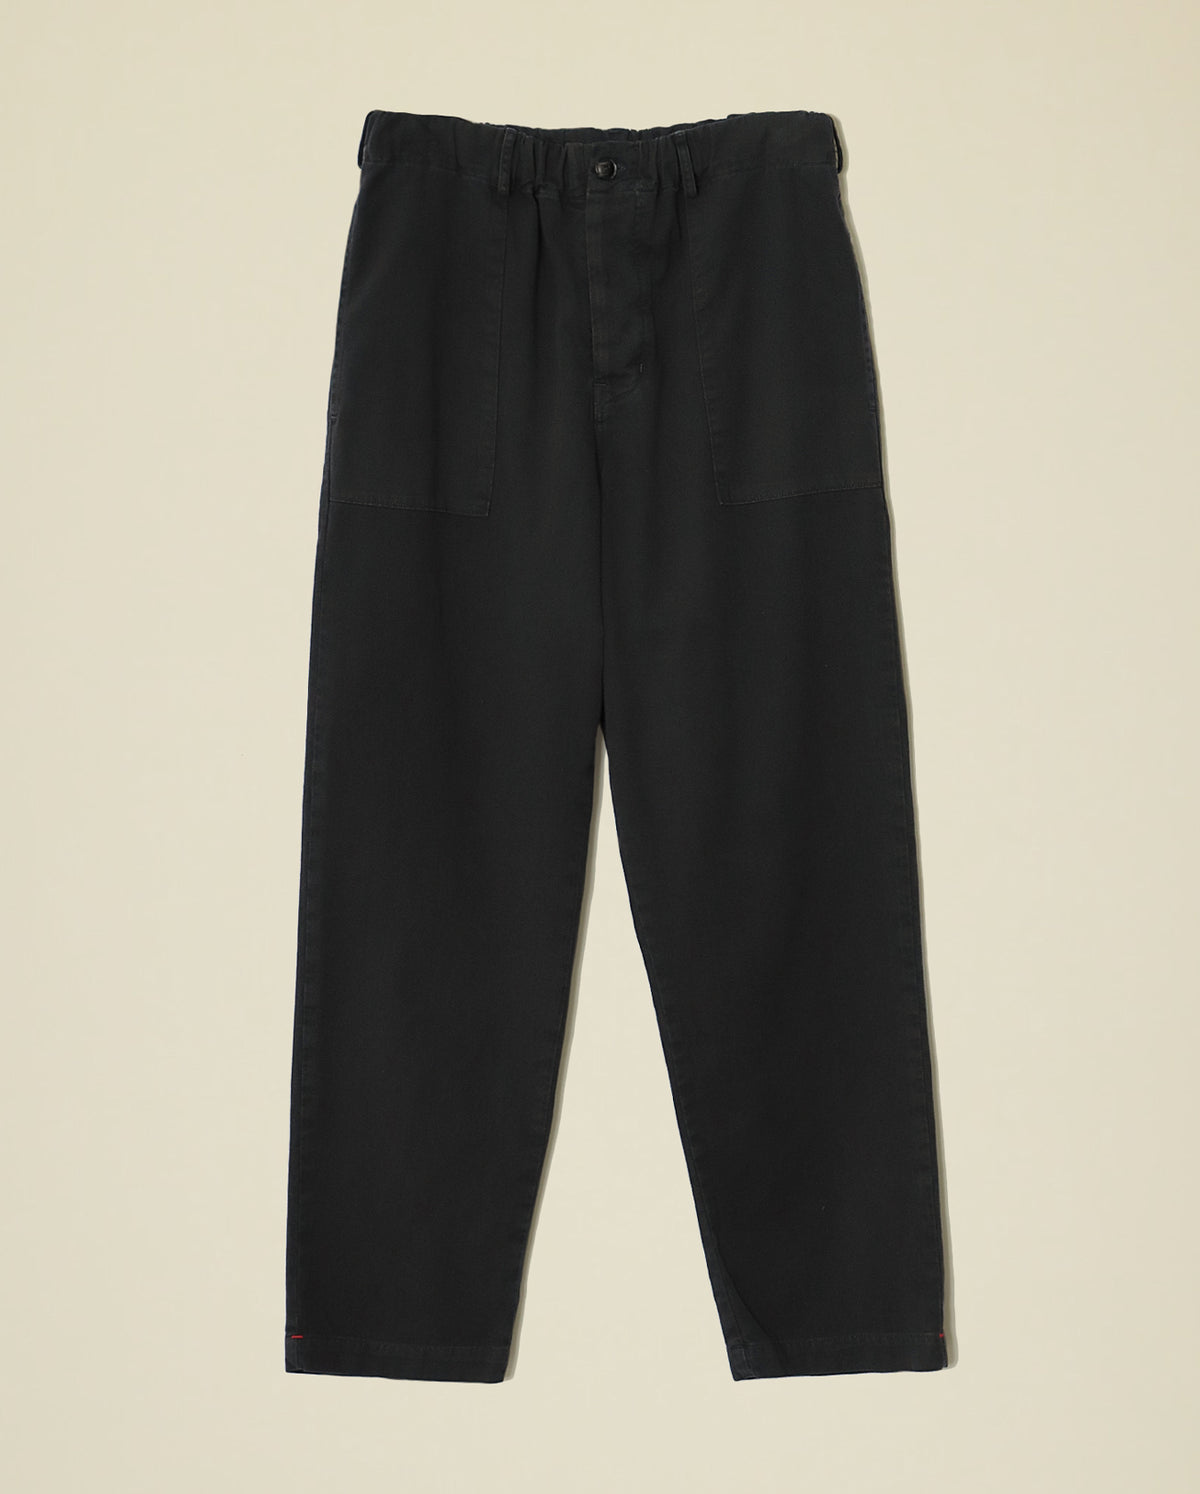 Mercer Pant - Vintage Black